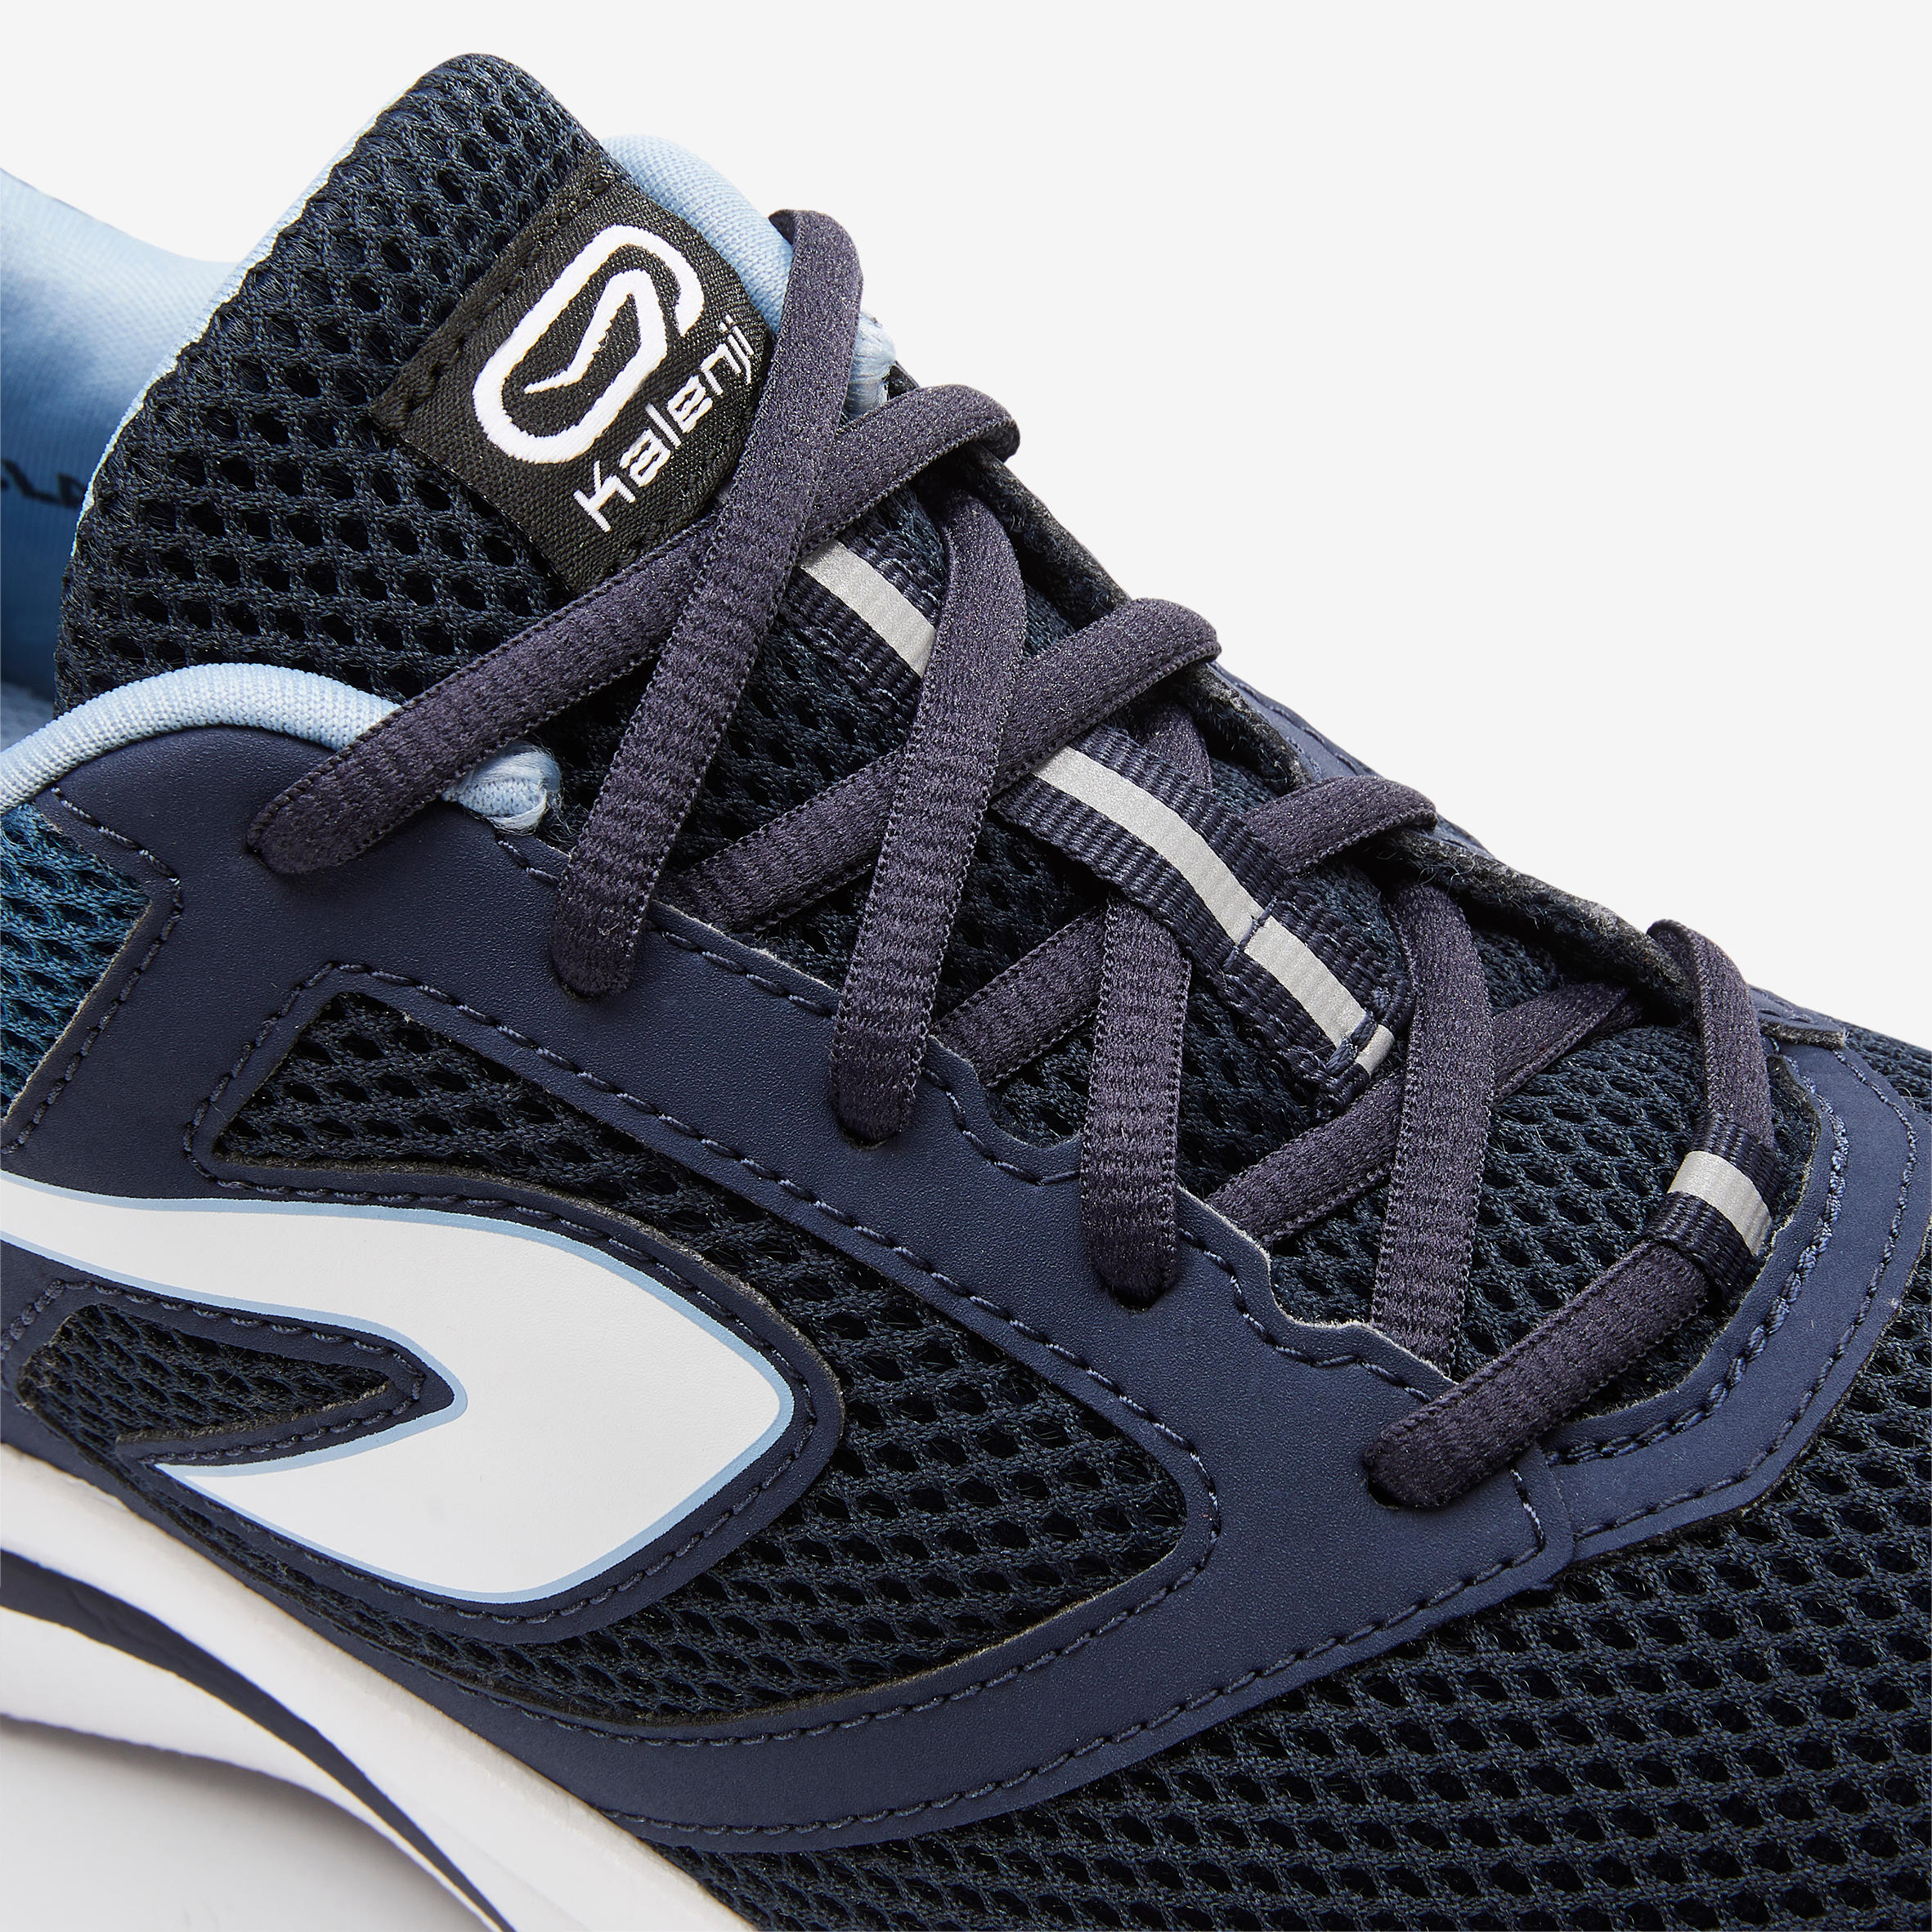 Men's Running Shoes - Run Active Blue - Dark blue - Kalenji